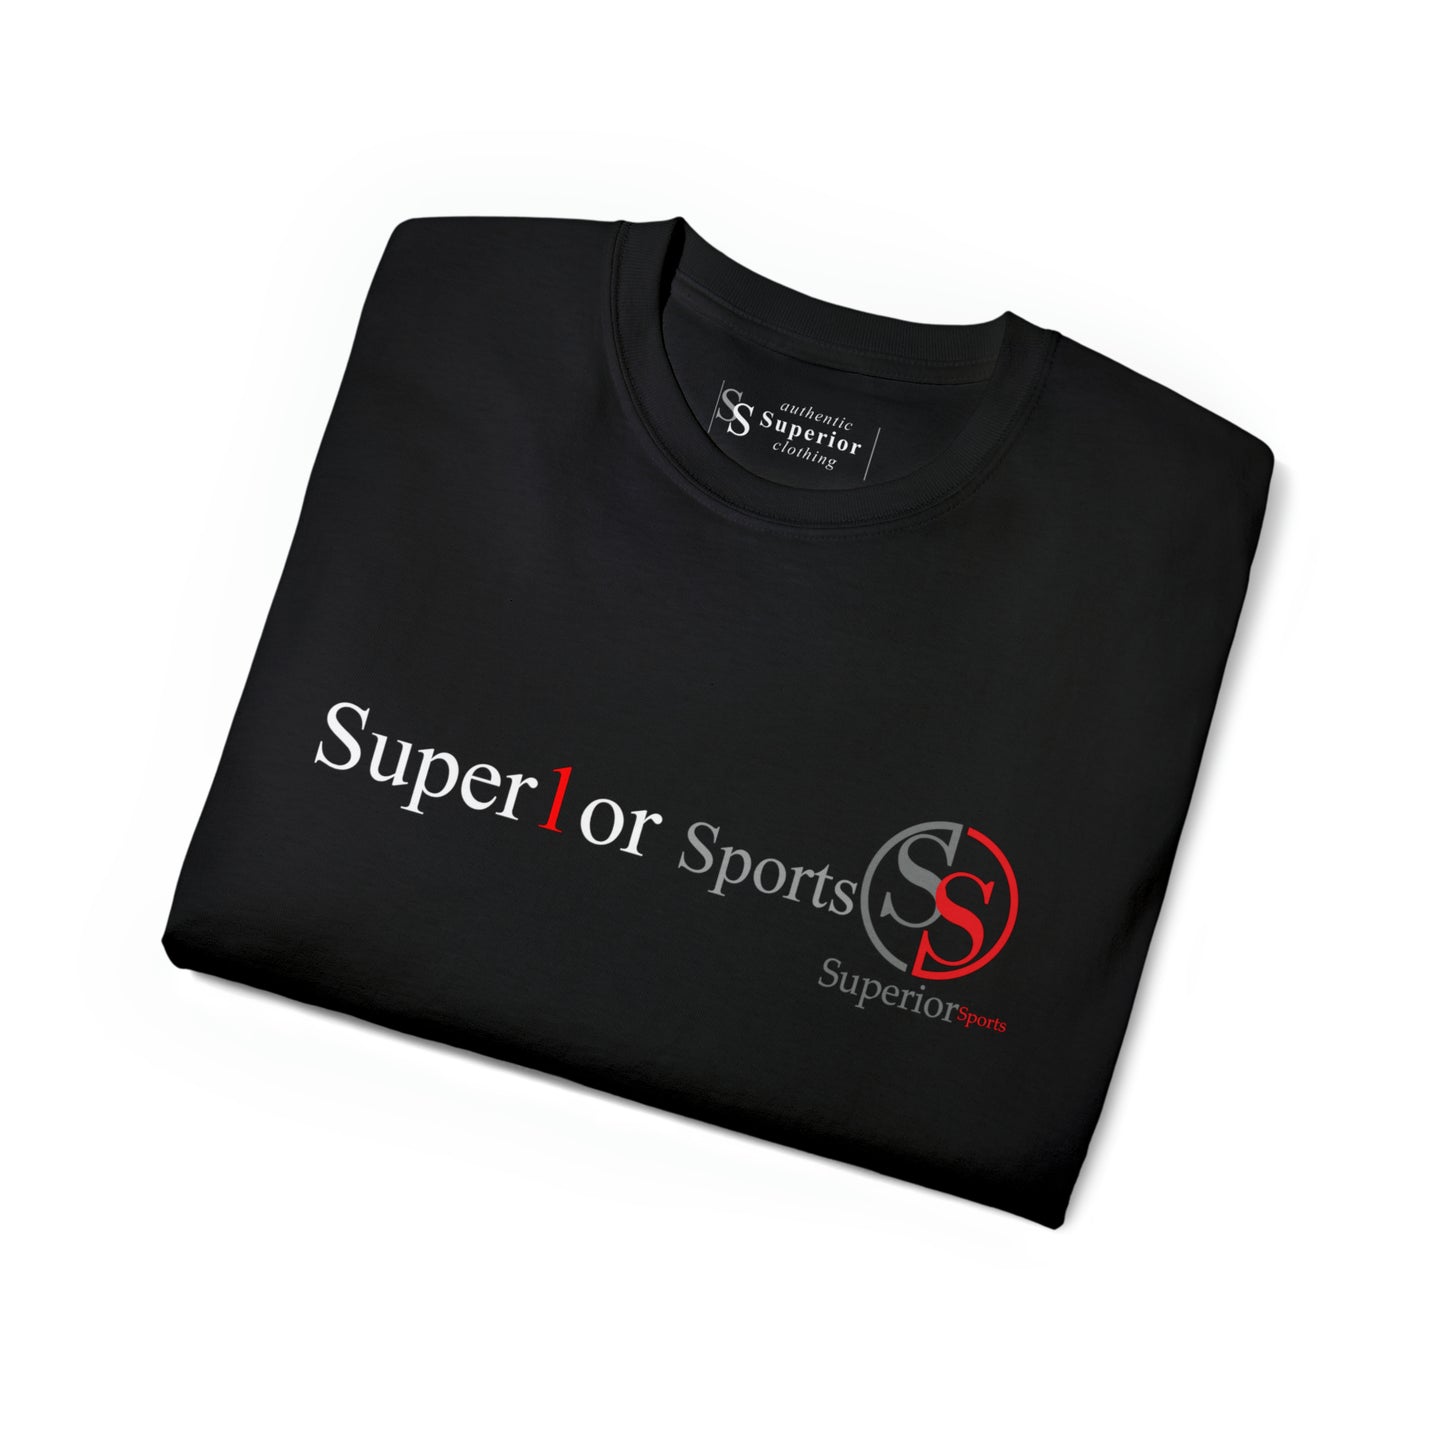 Superior Sports SS Unisex Ultra Cotton Tee